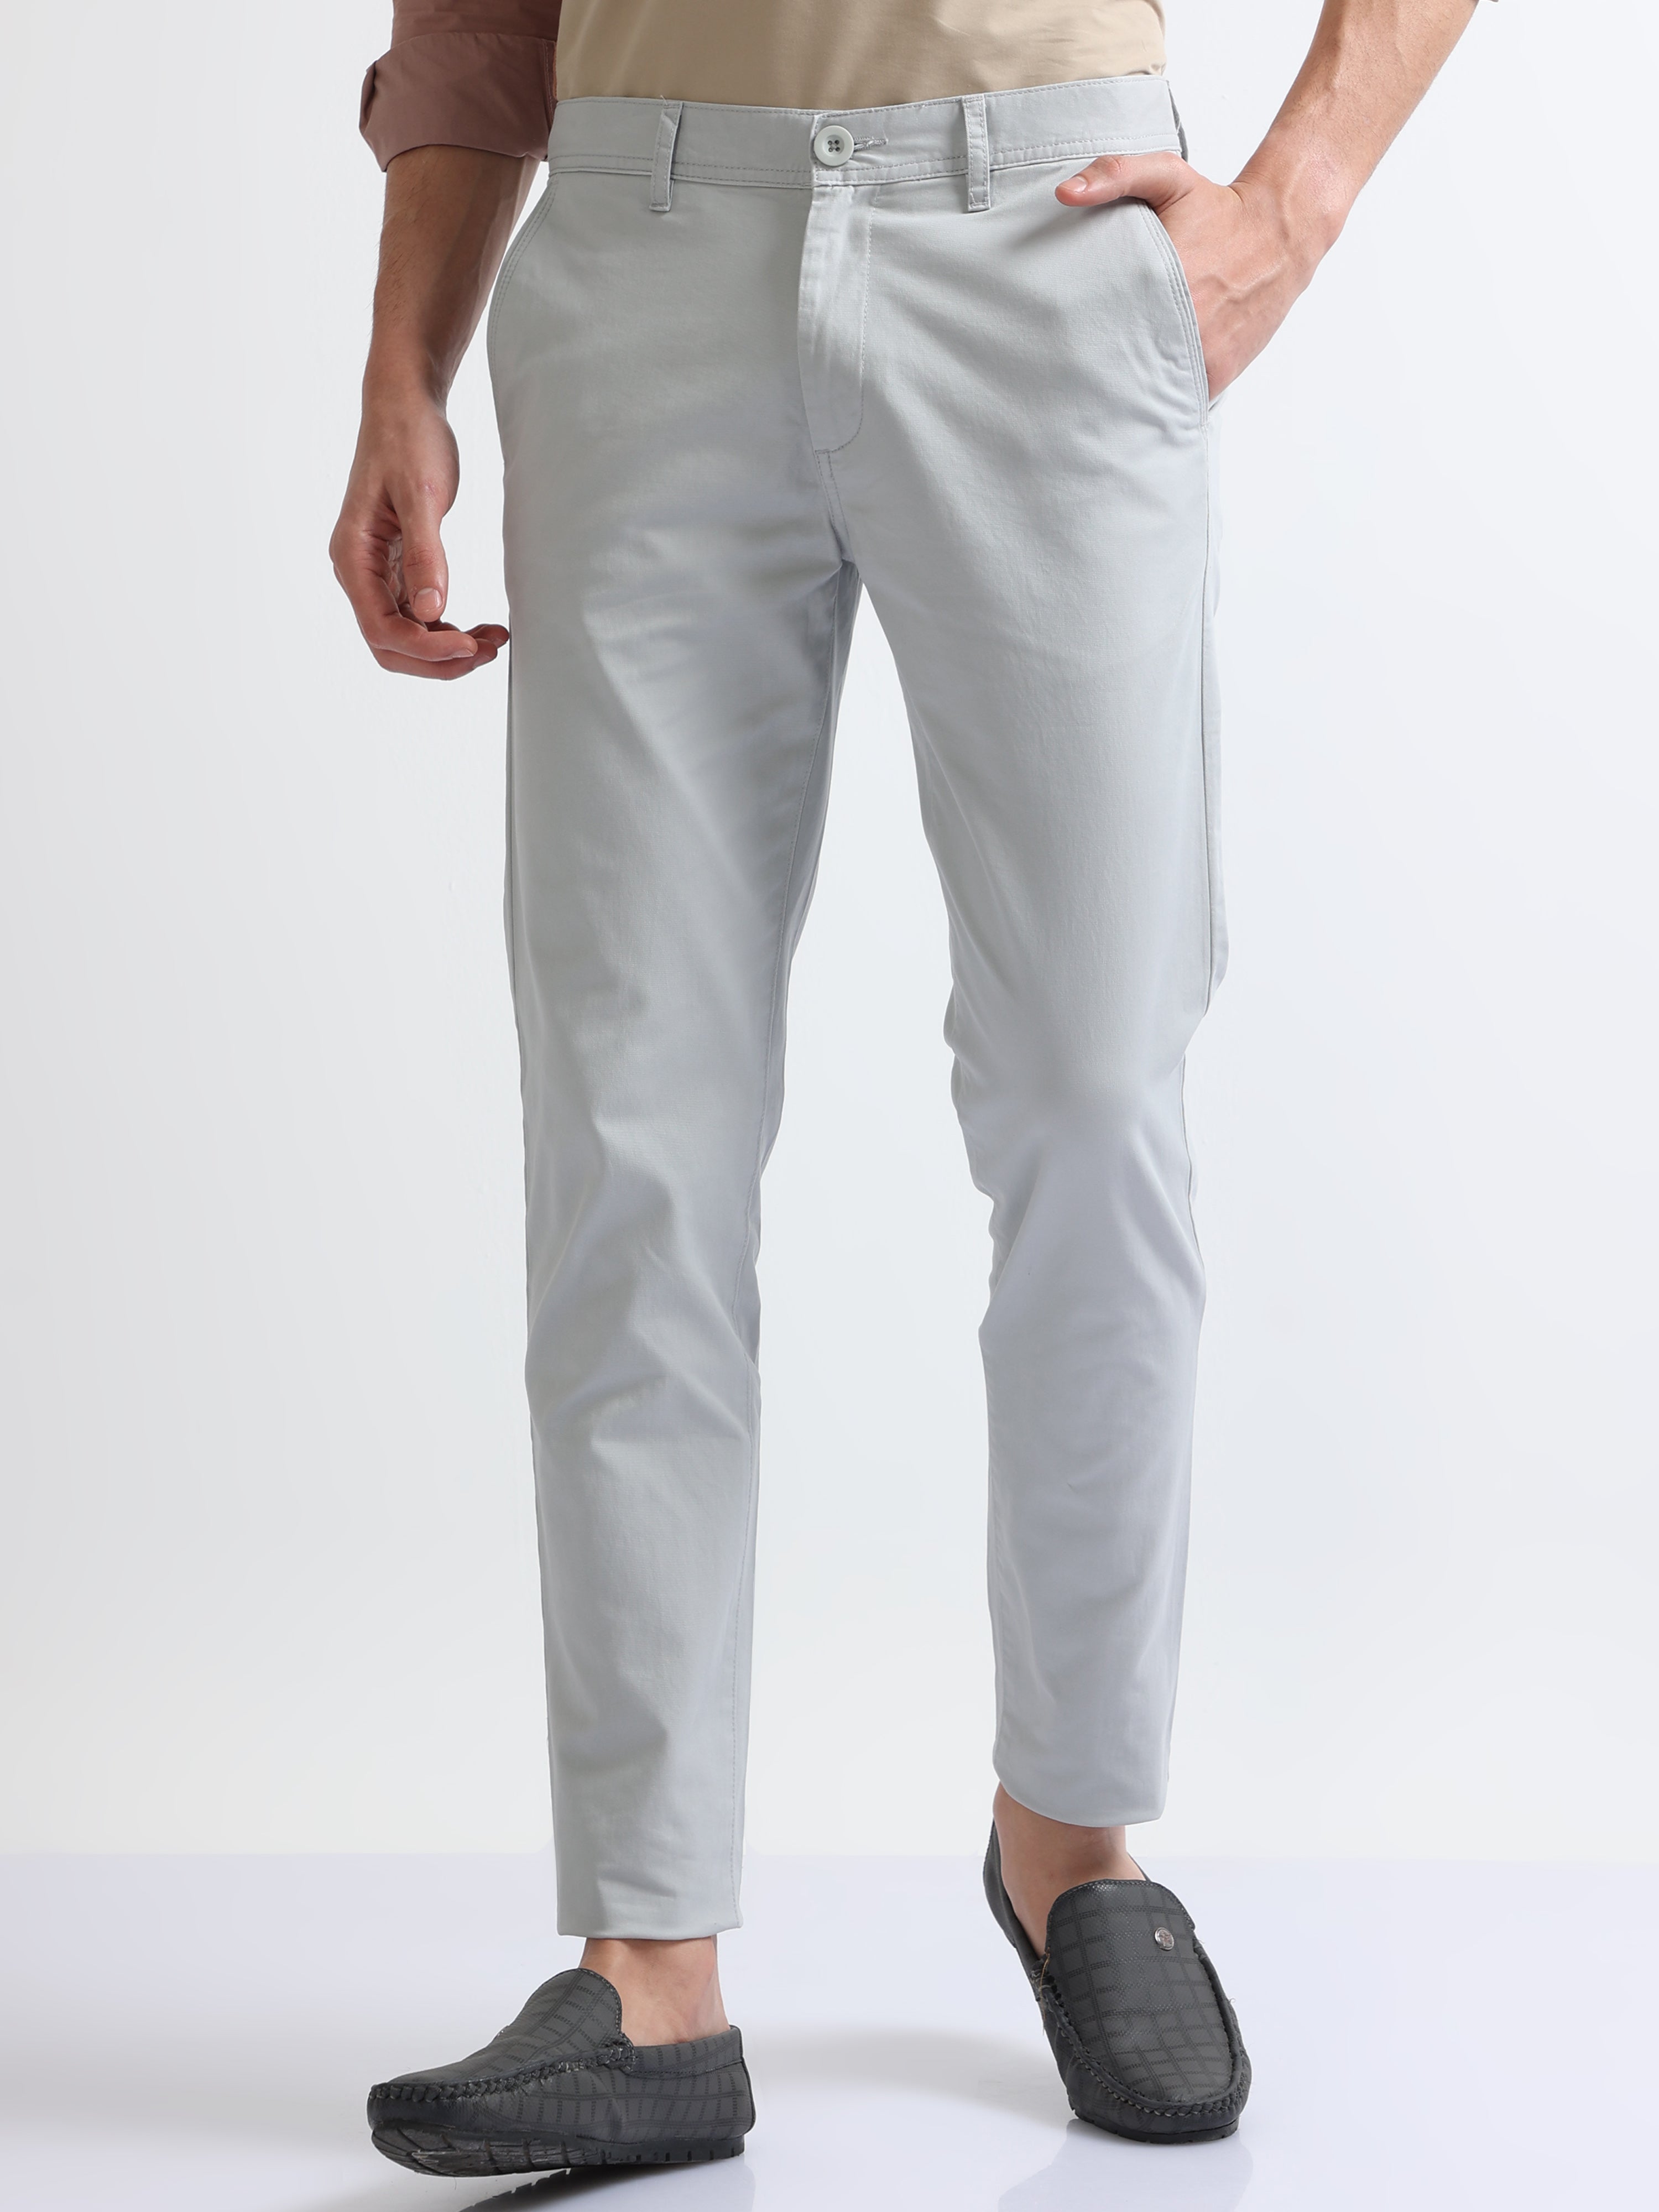 Men's Trousers & Chinos | New Lower Prices - Matalan - Matalan